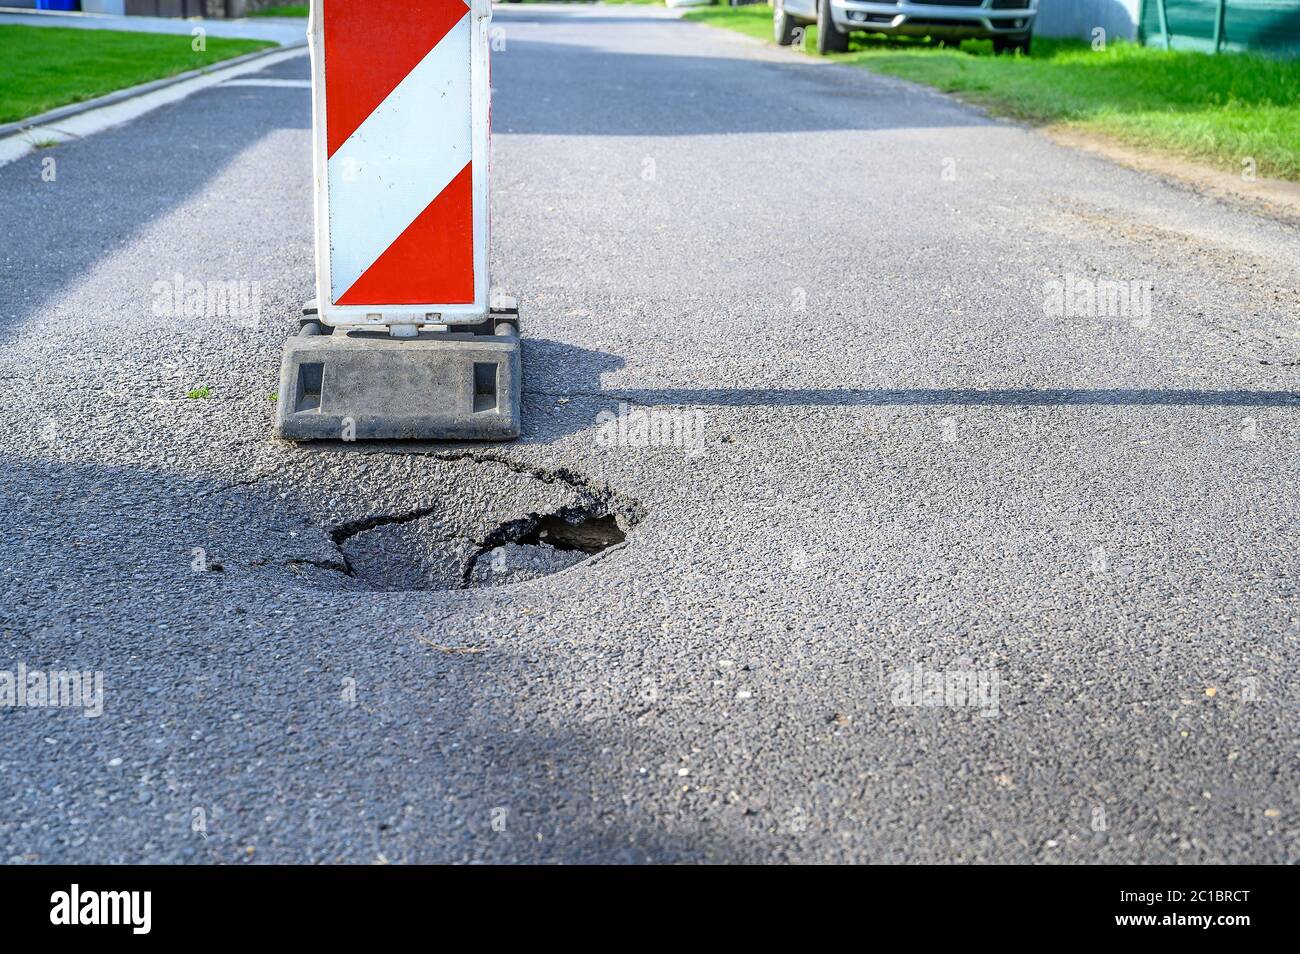 Pothole on asphalt street with detour alert traffic sign Stock Photo